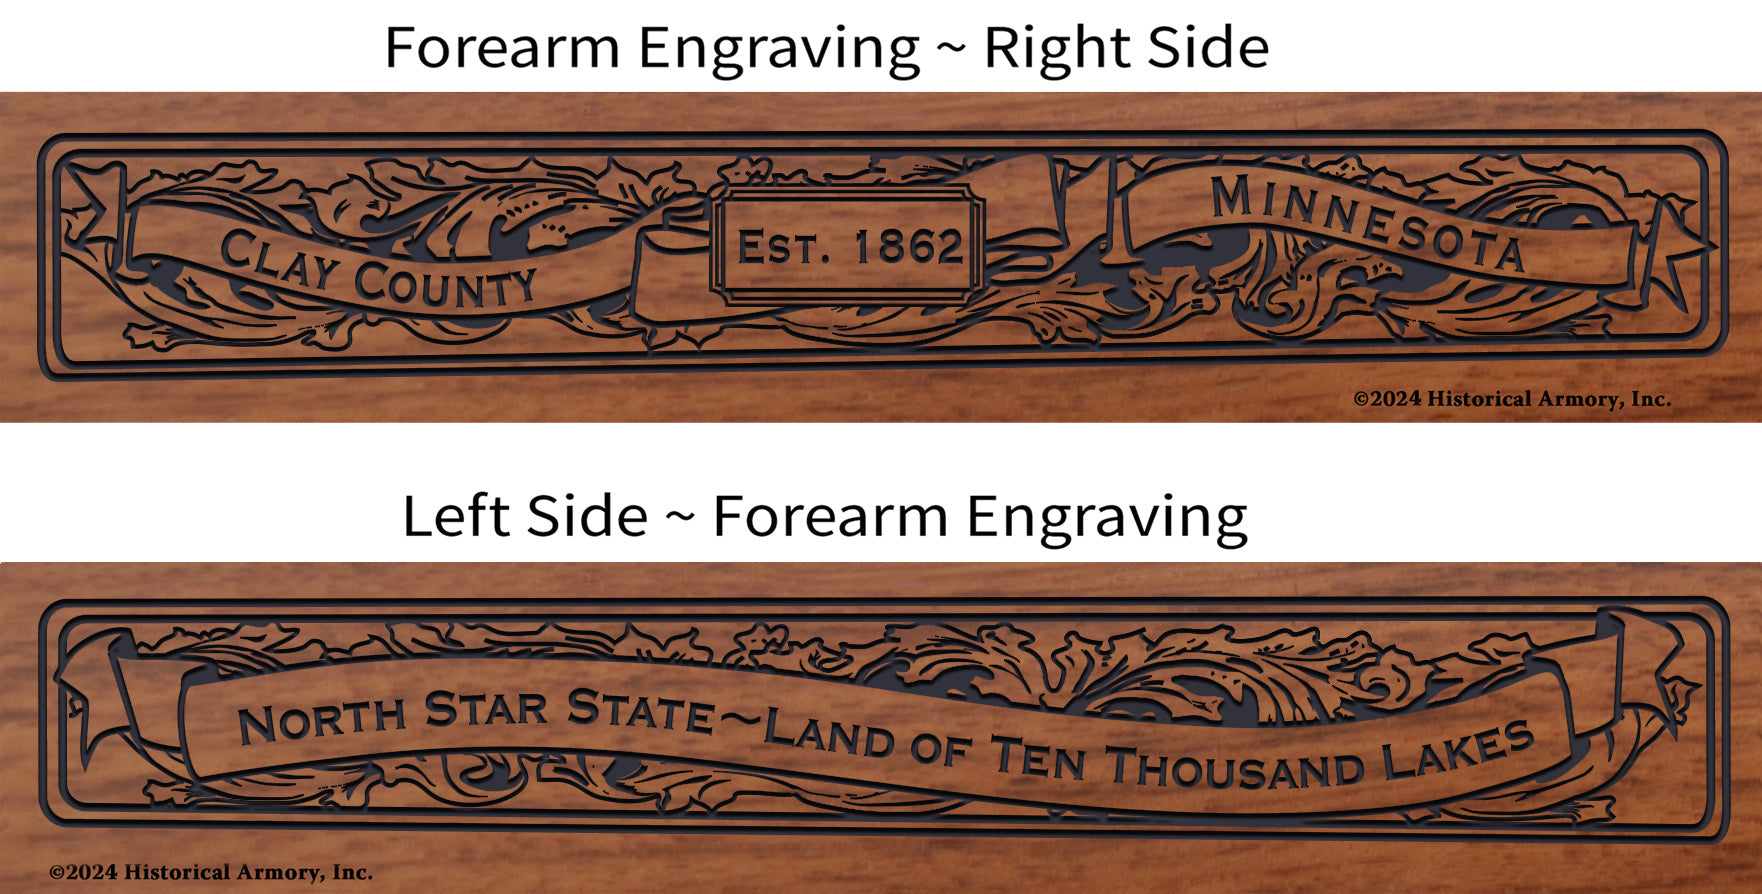 Clay County Minnesota Engraved Rifle Forearm